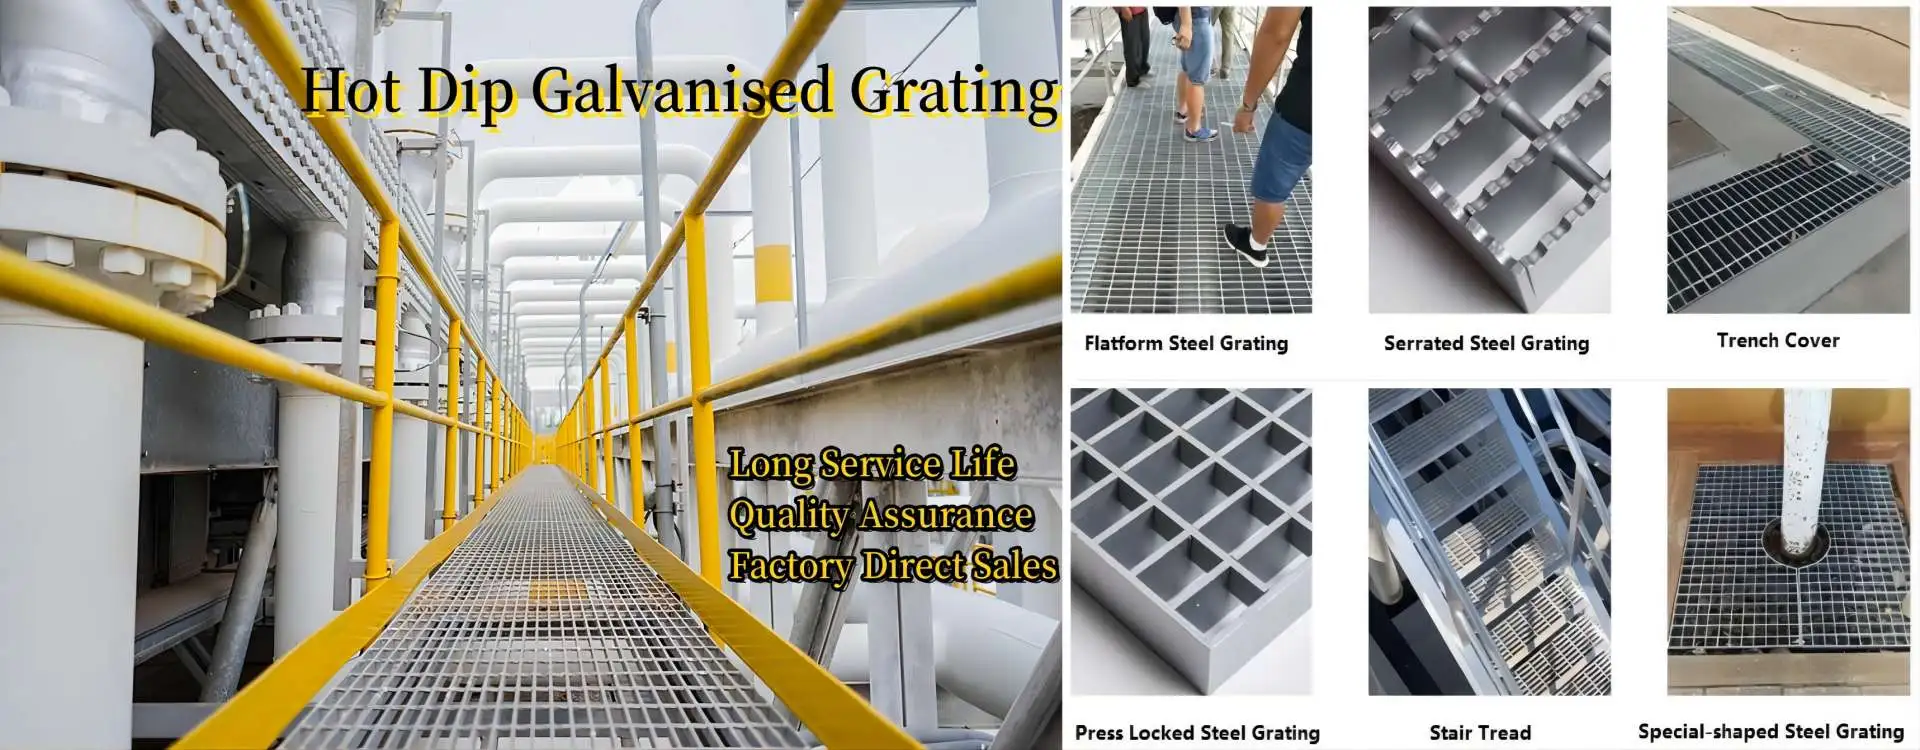 Galvanised grating